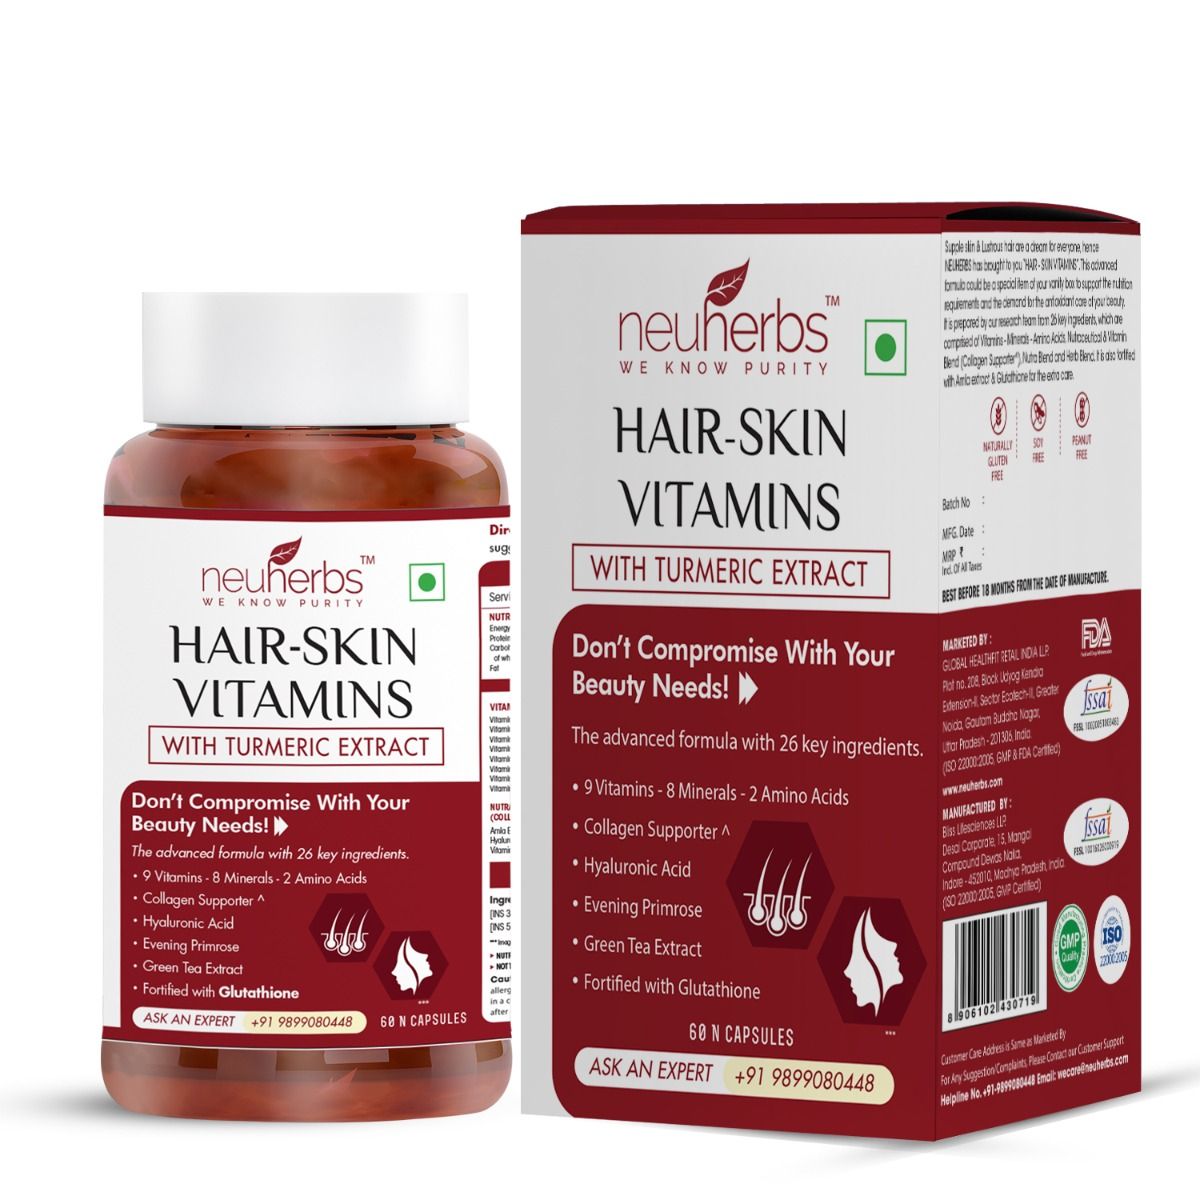 Neuherbs Hair-Skin Vitamins, 60 Capsules, Pack of 1 